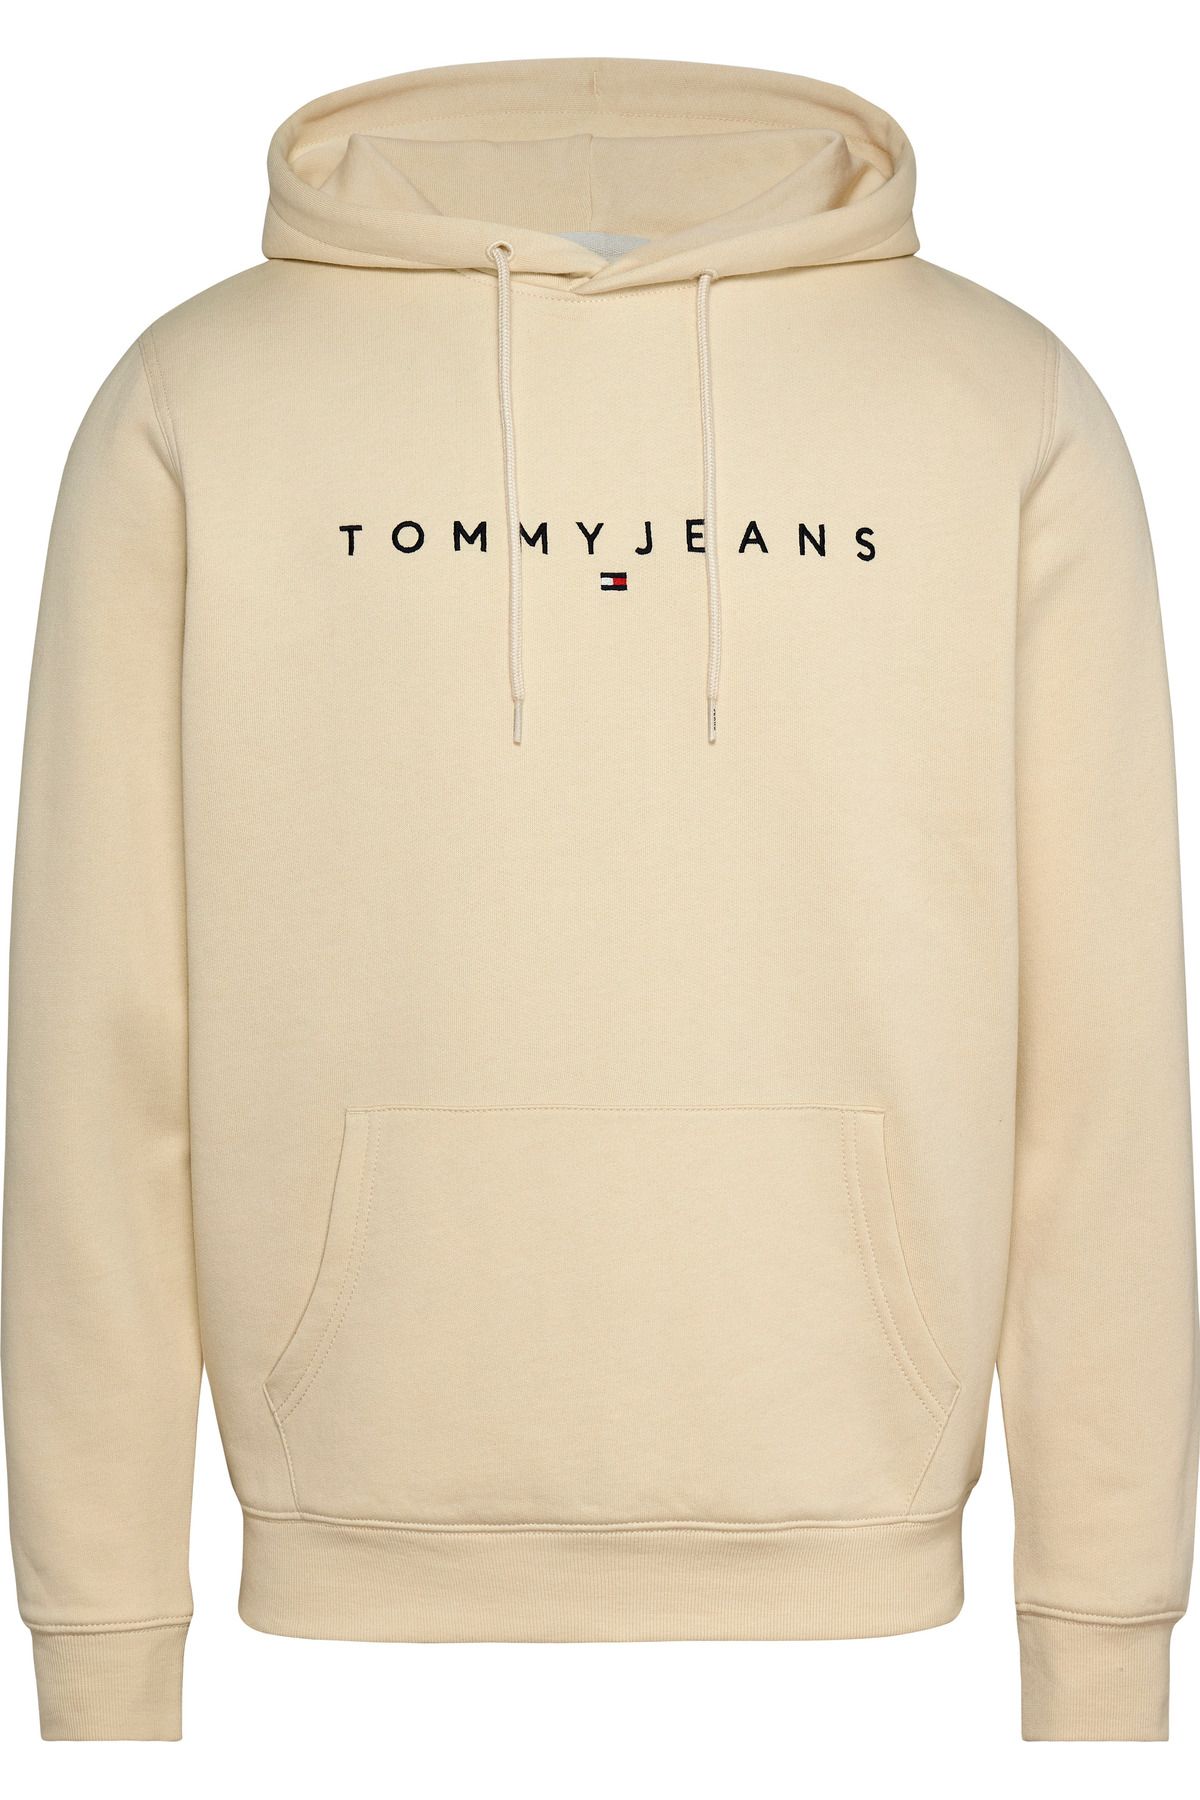 Tommy Hilfiger Erkek Marka Logolu Kapüşonlu Şık Görünüşlü Ekru Sweatshirt Dm0dm17985-acg